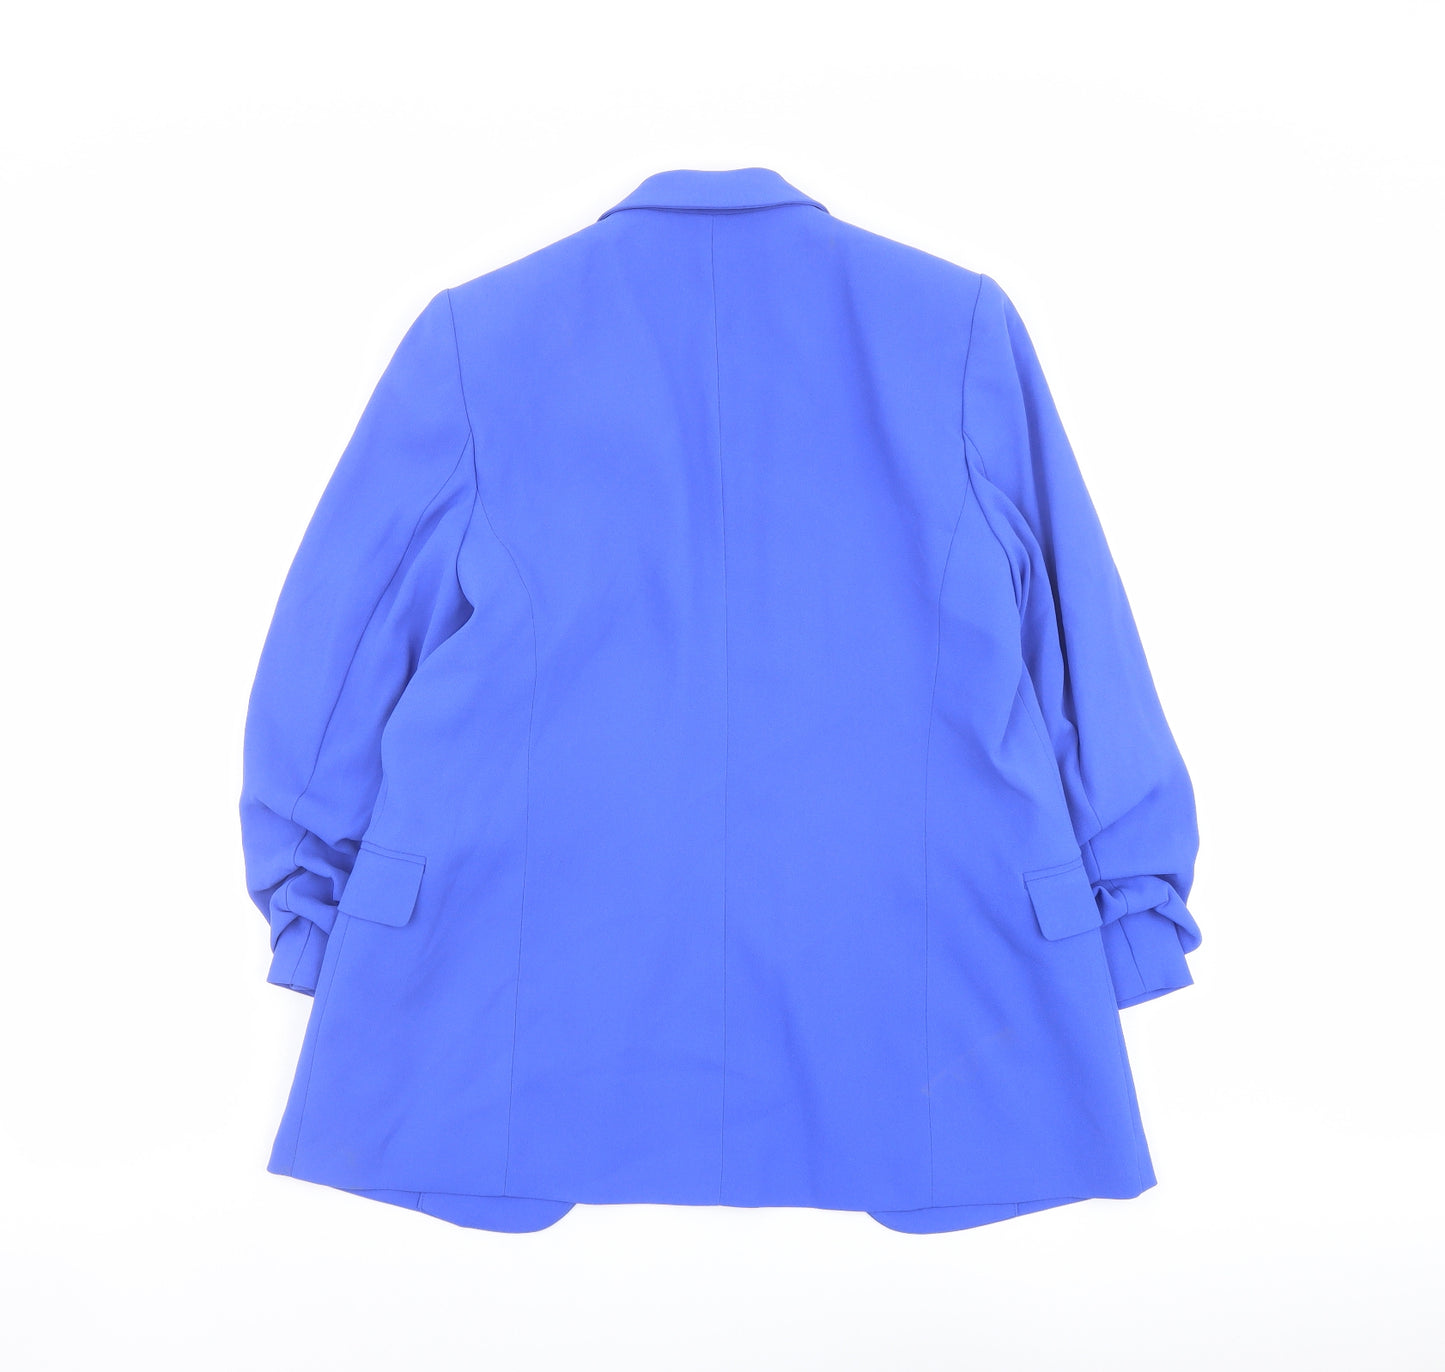 Marks and Spencer Womens Blue Herringbone Polyester Jacket Blazer Size 10